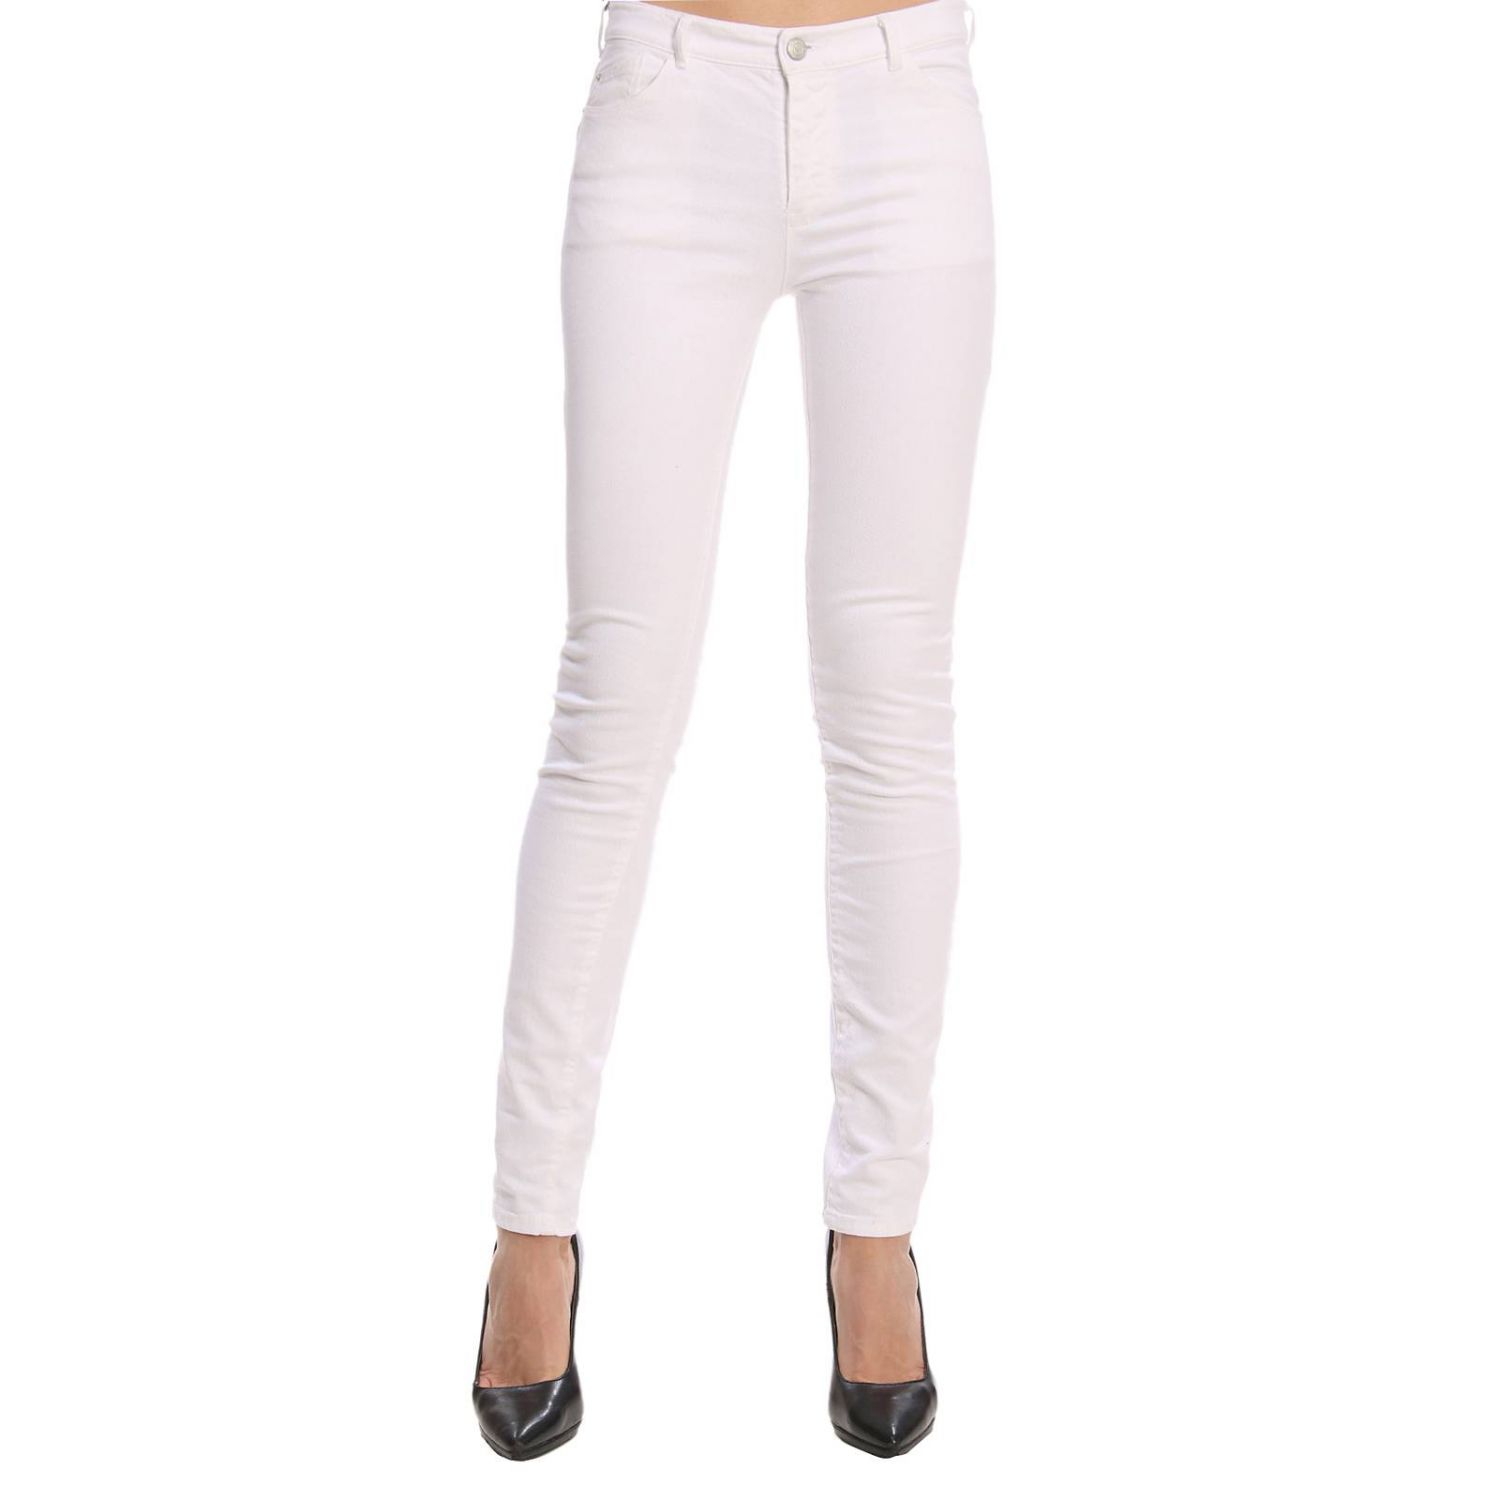 armani white jeans ladies